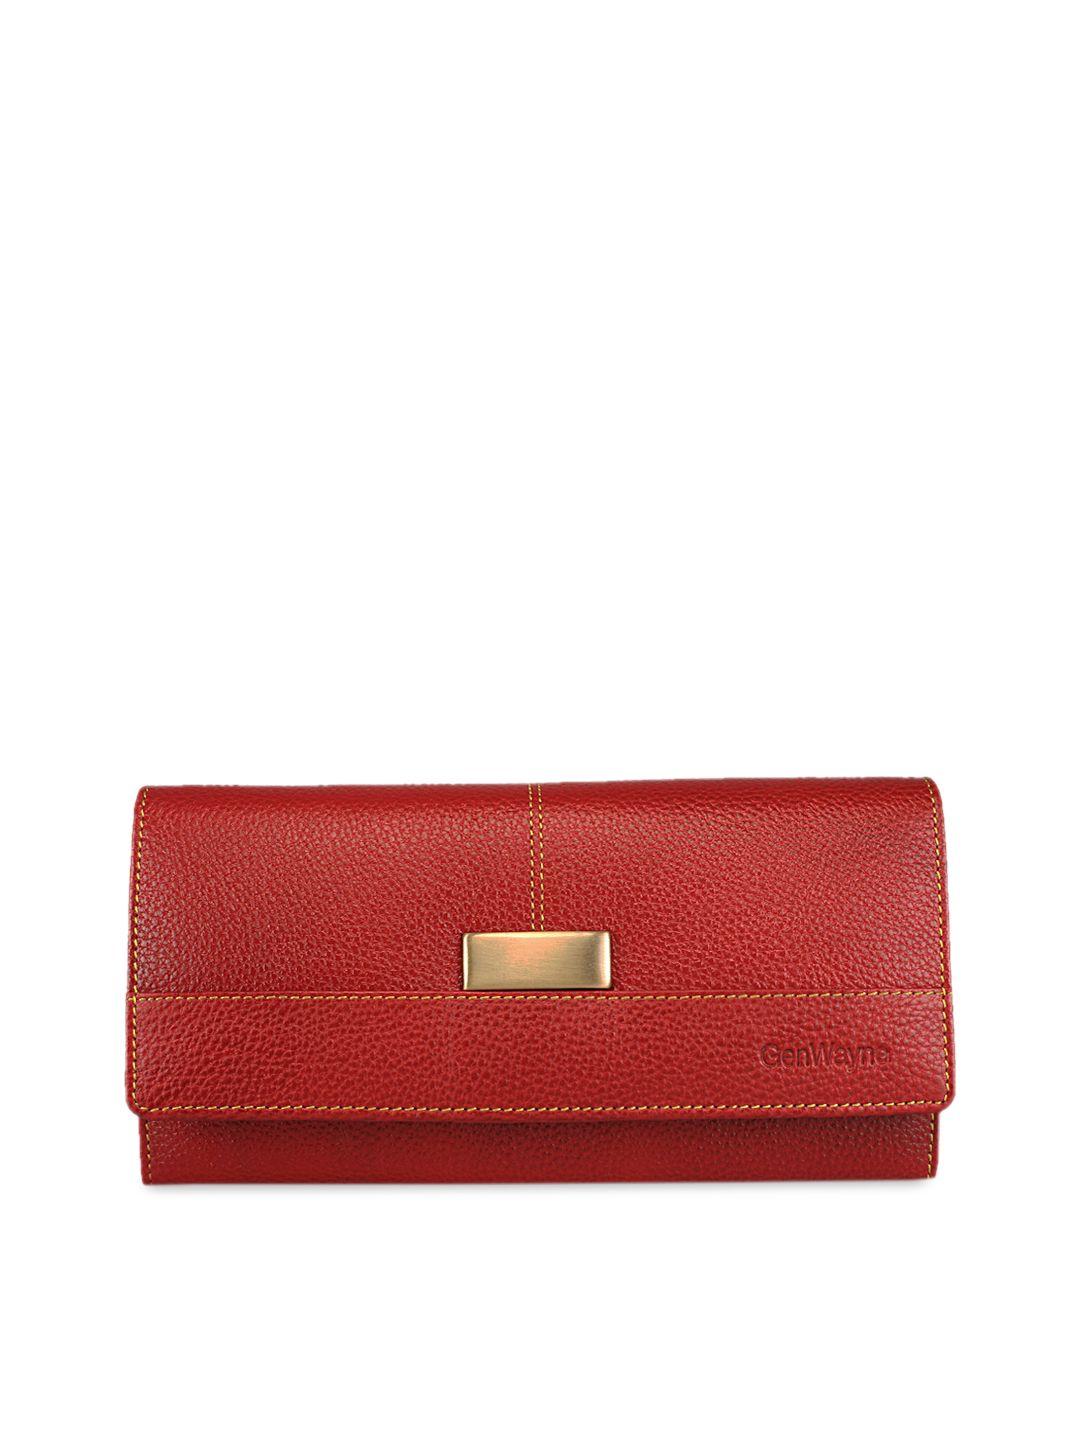 genwayne women red solid two fold wallet